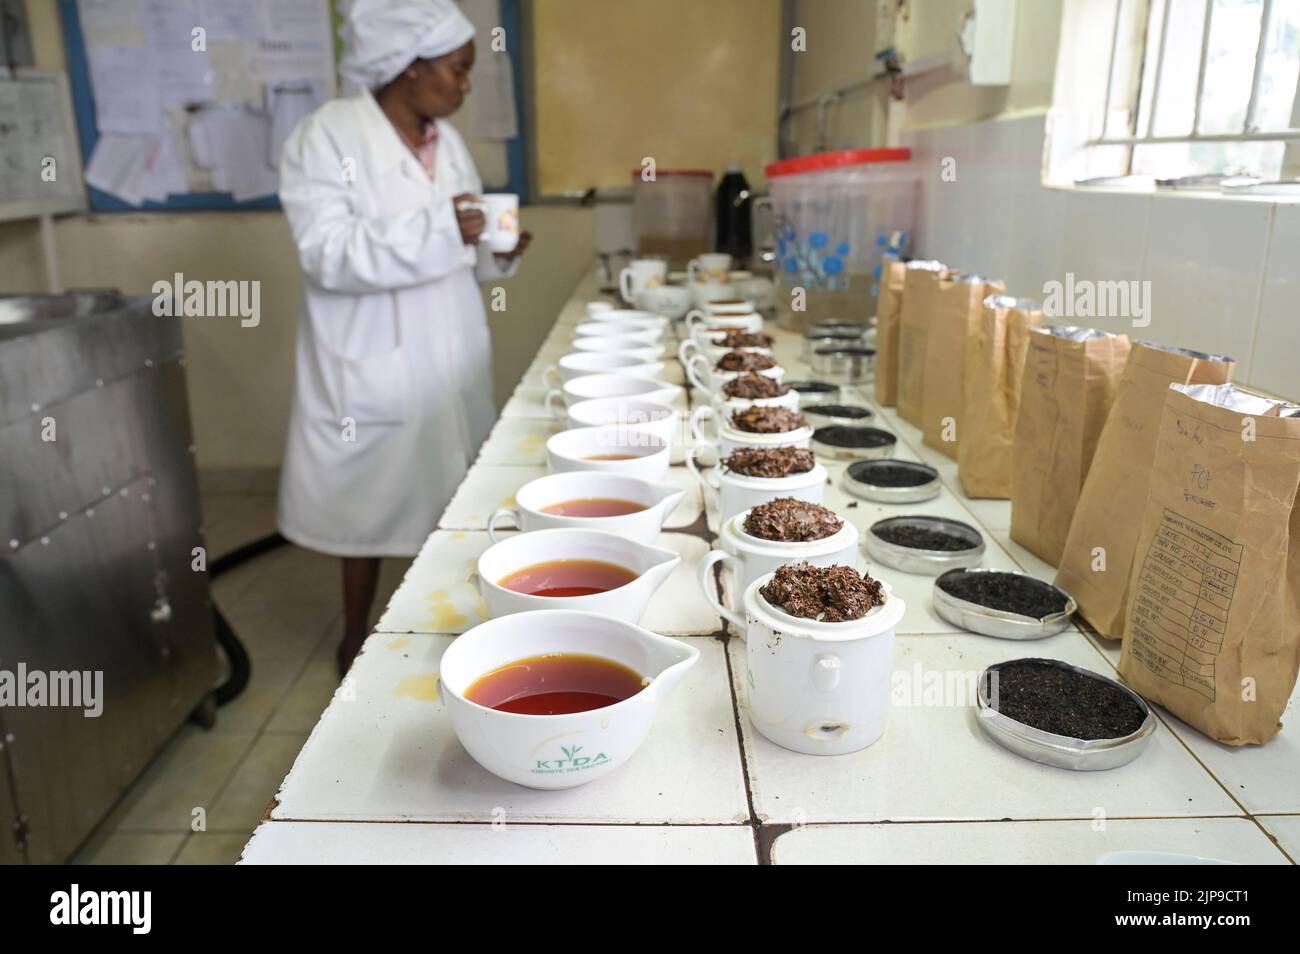 KENYA, Kimunye, fábrica de té KTDA, tazas con diferentes calidades de té para la degustación de té, cocina de té, color y sabor del té Foto de stock